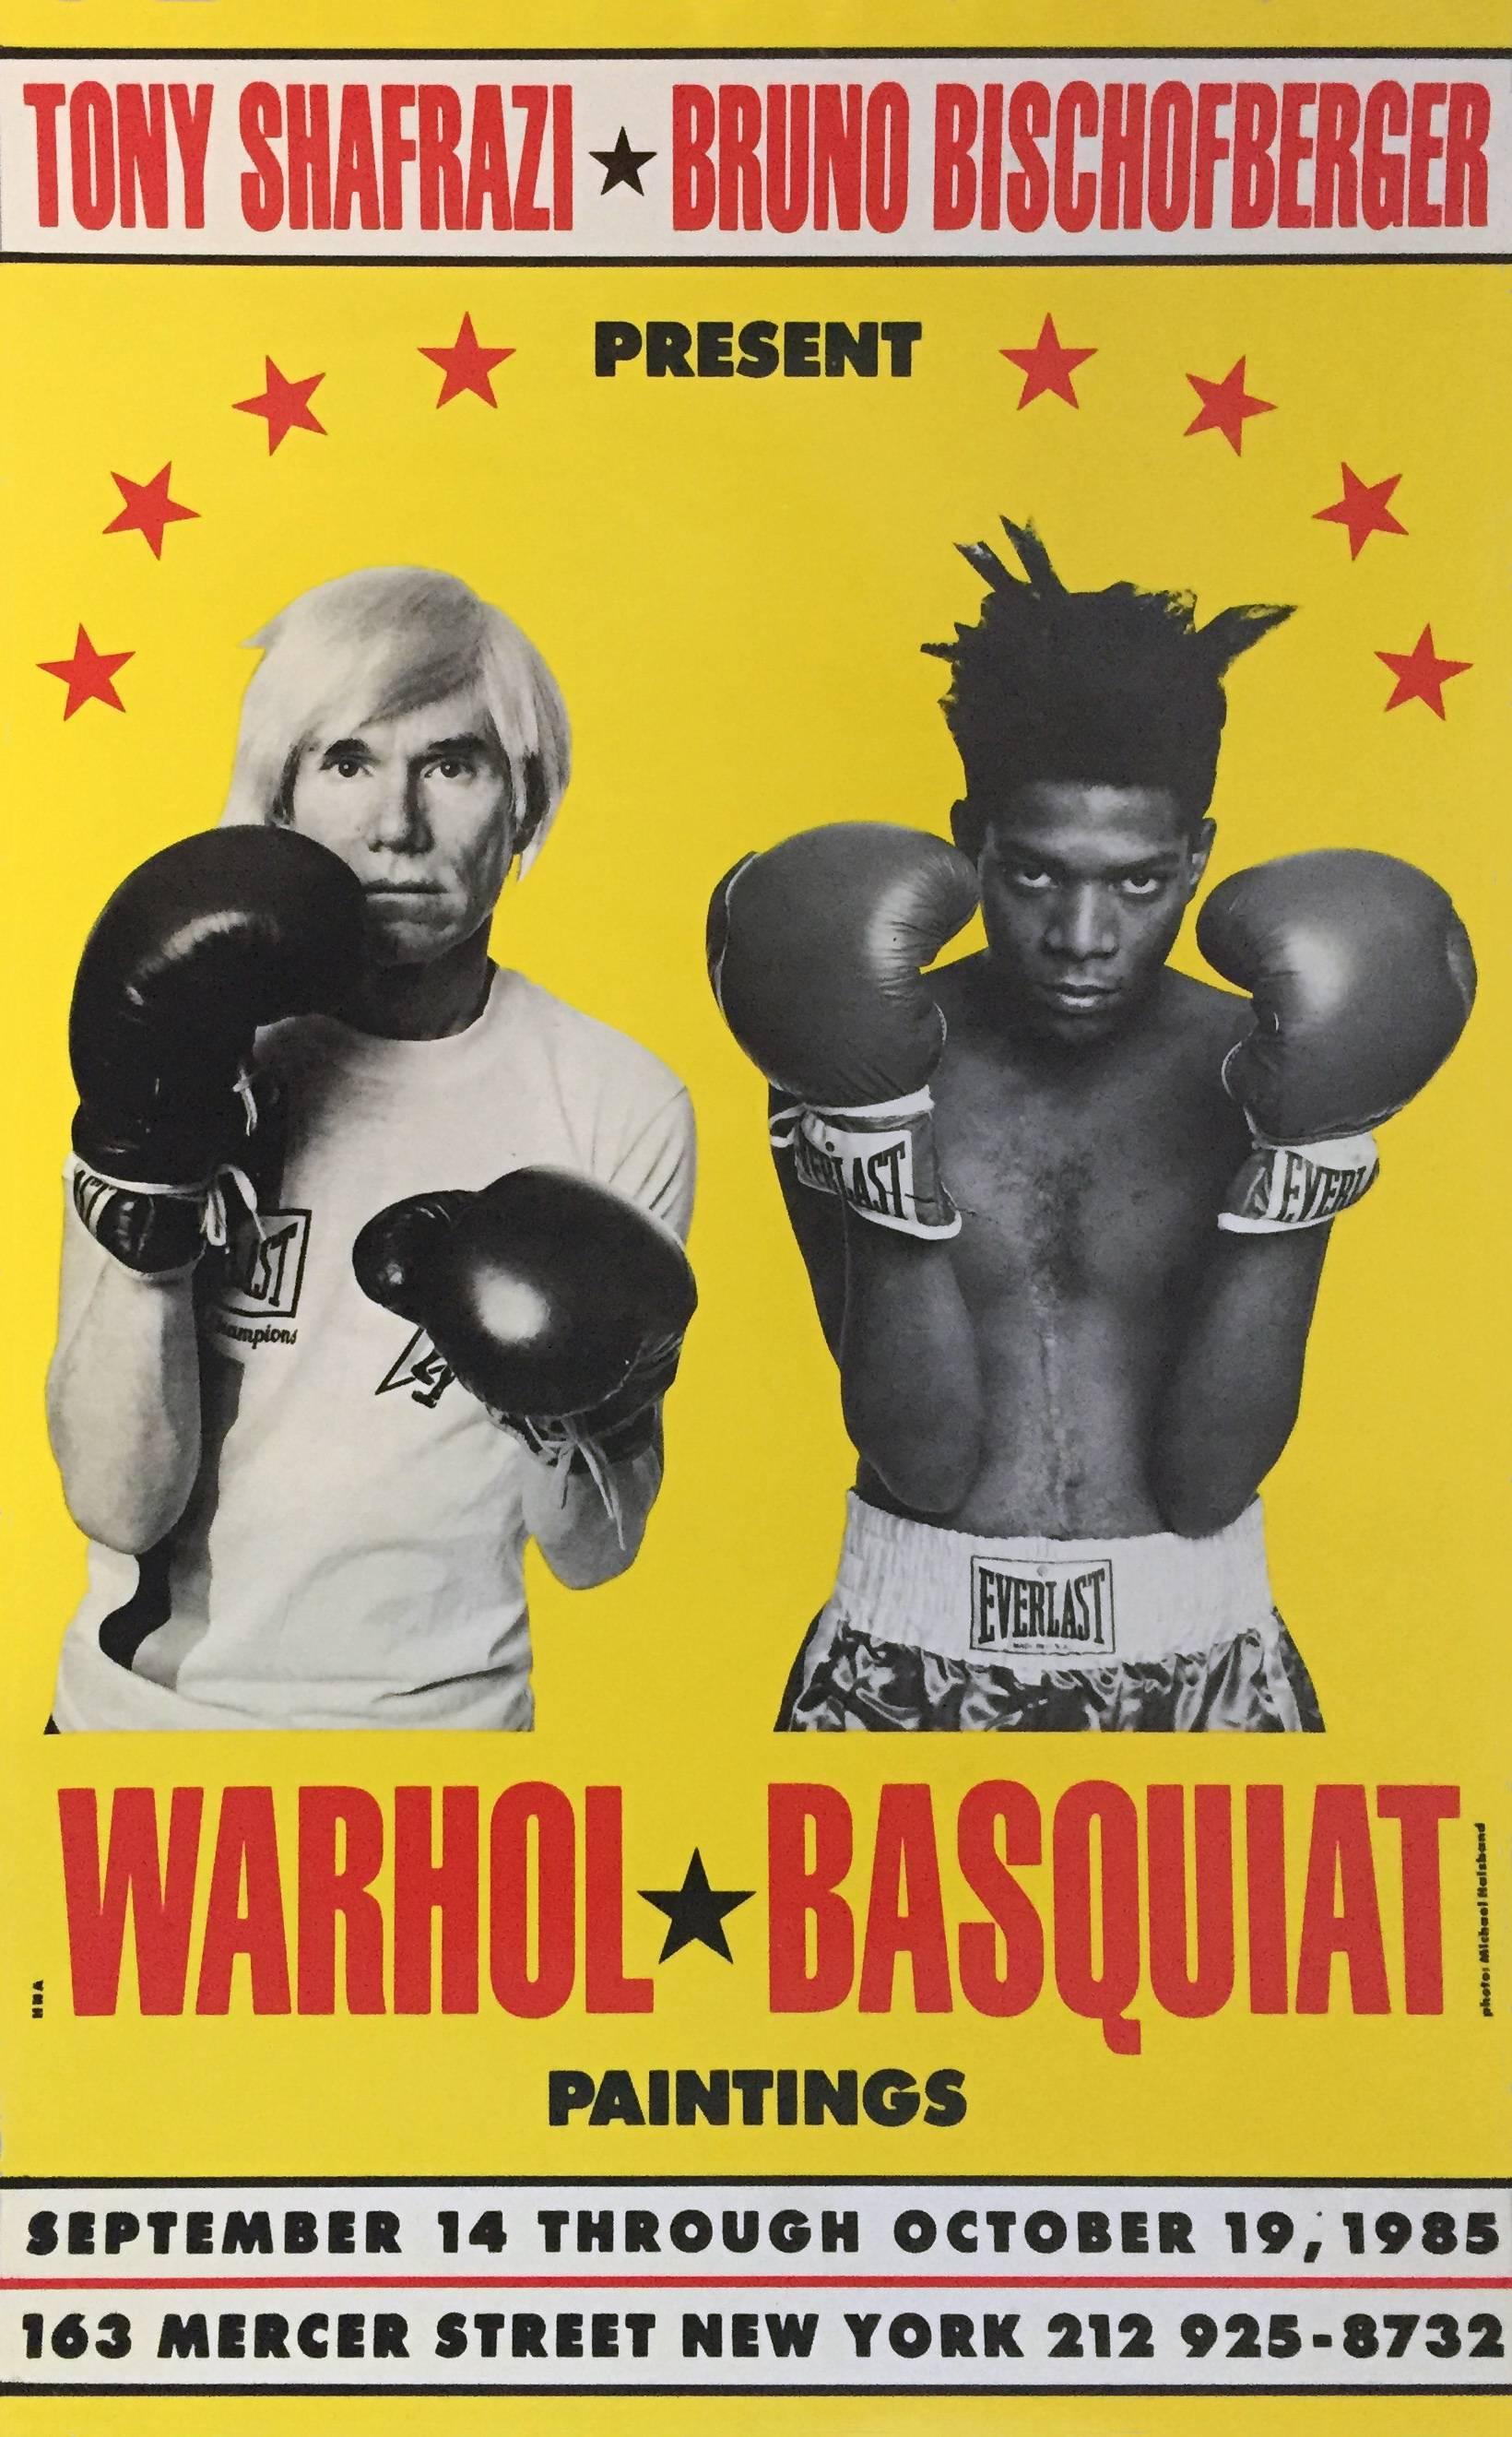 Warhol Basquiat Paintings Exhibit Poster (Shafrazi gallery) - Print by Michael Halsband